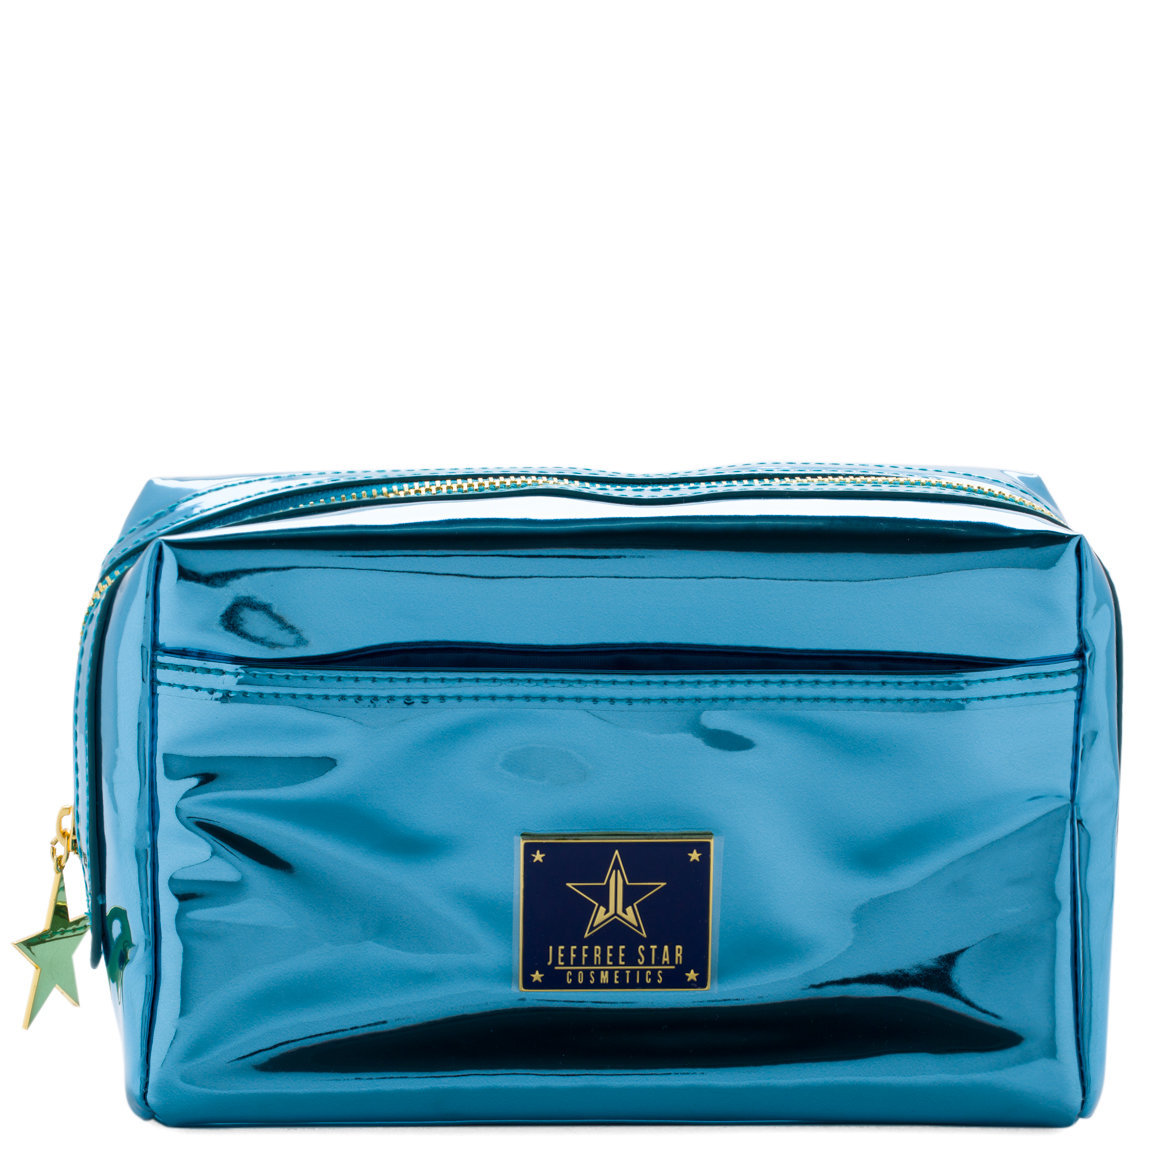 Jeffree Star Cosmetics Reflective Makeup Bag Light Blue | Beautylish